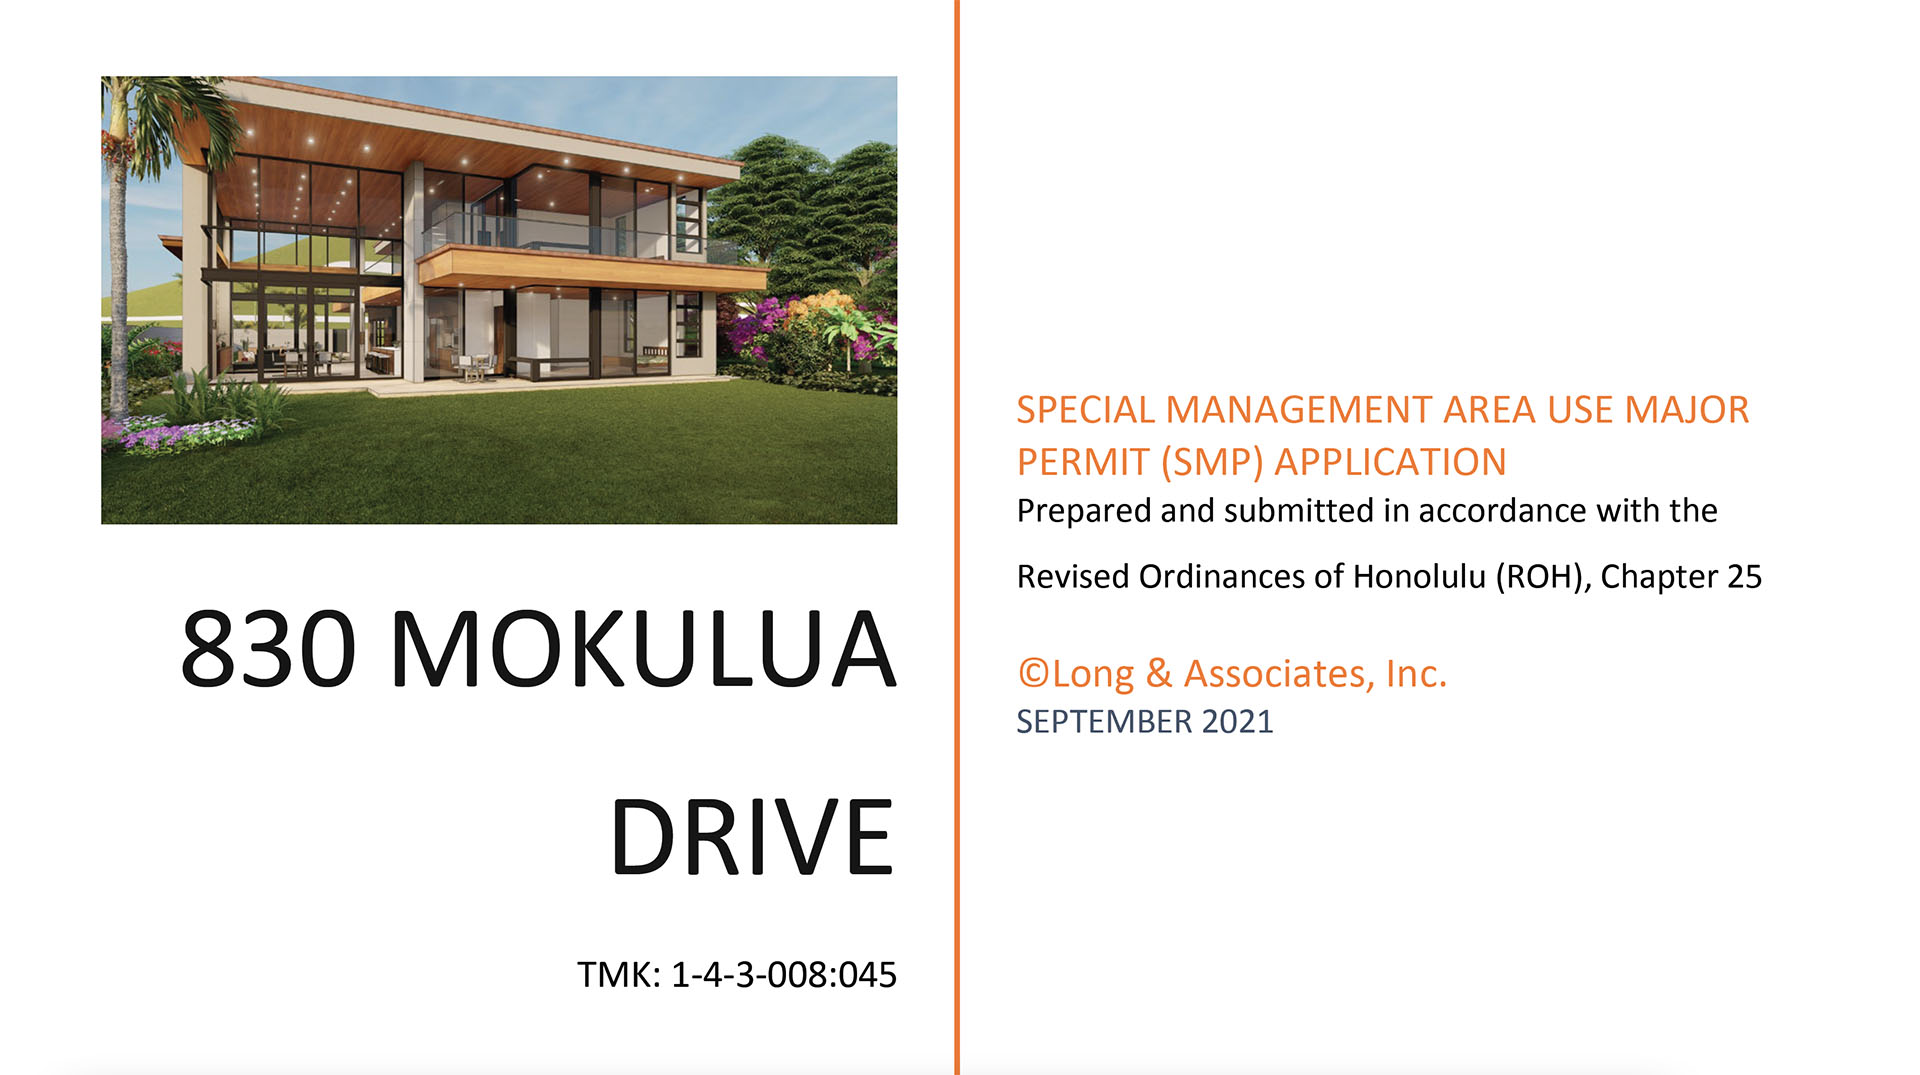 830 Mokulua Drive SMA Application Hawaii Architects Jeff Long Oahu Hawaii Honolulu Luxury Home builder 